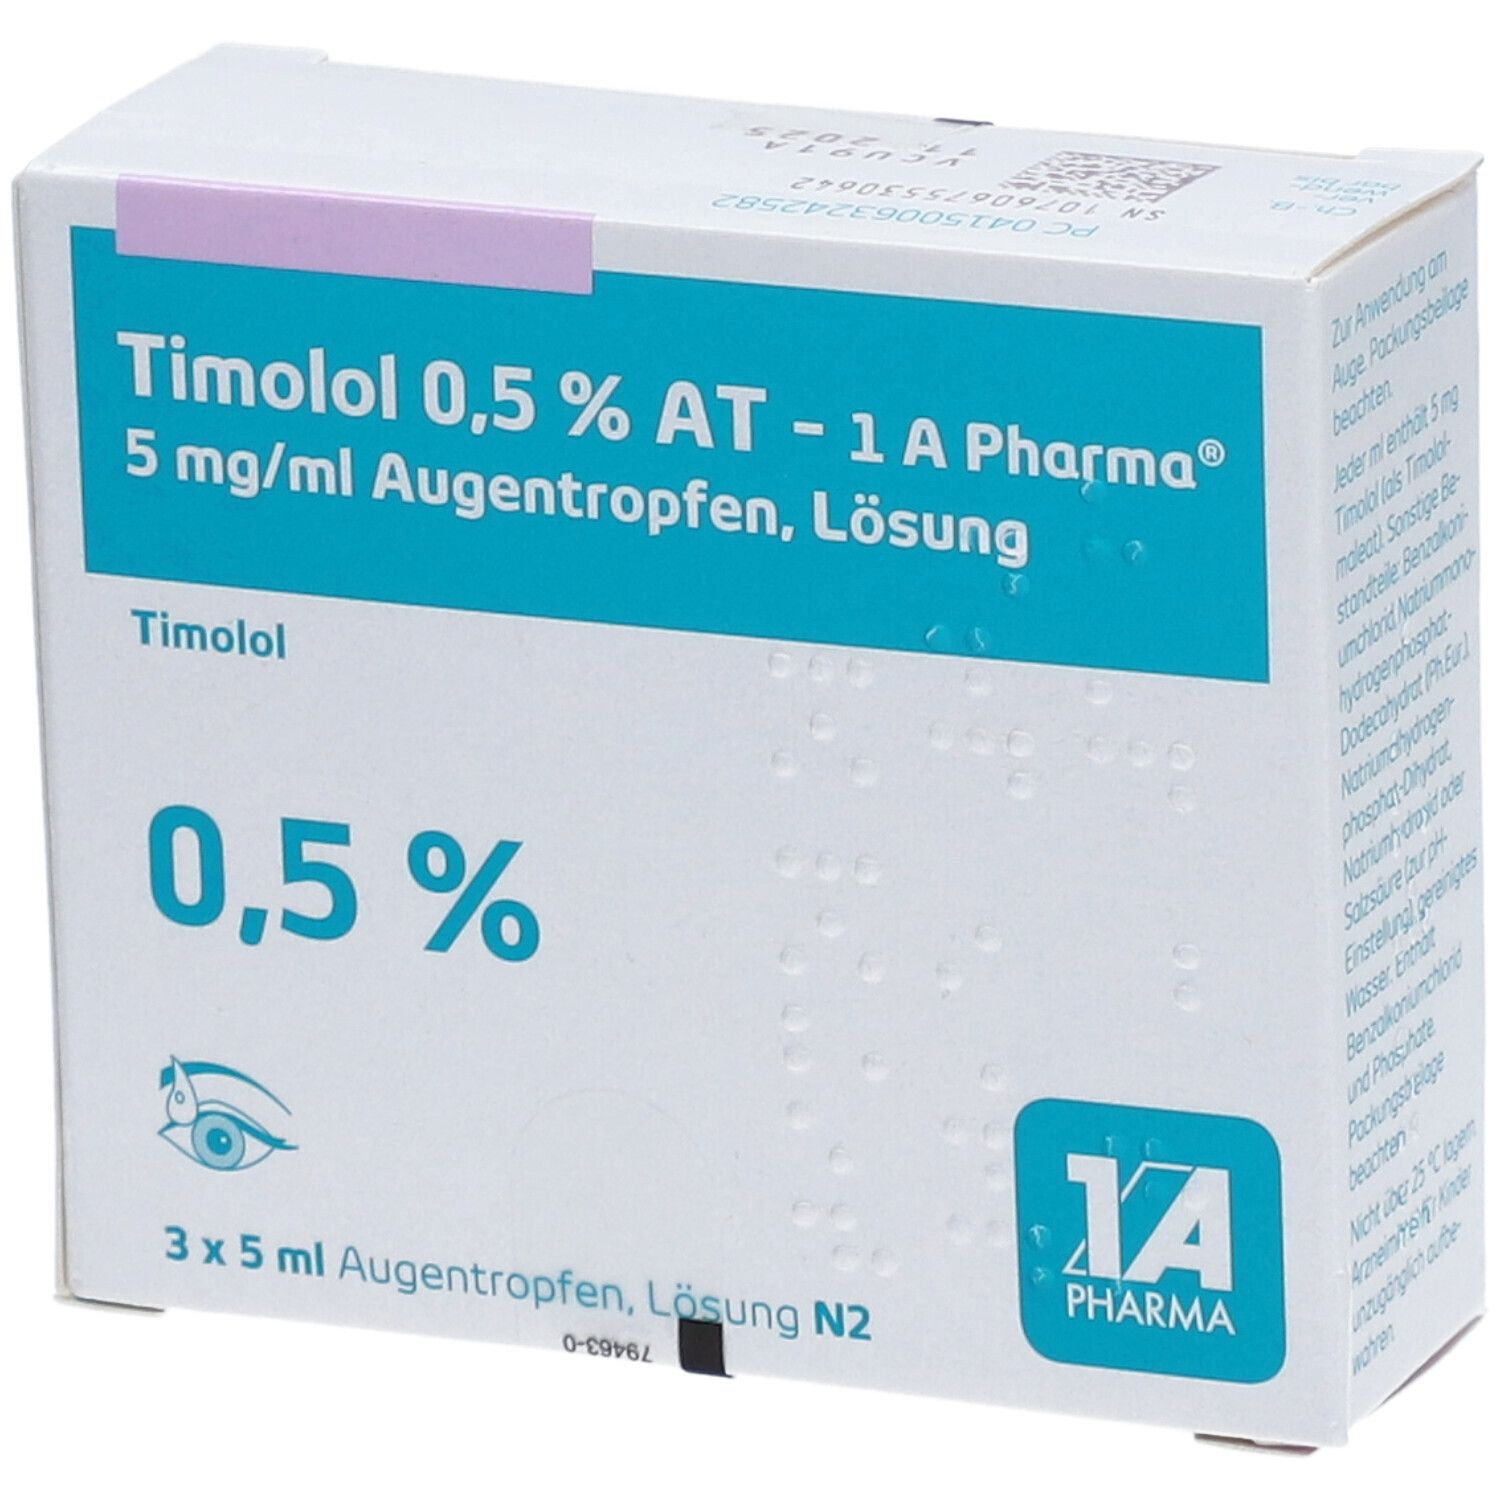 Timolol 0.5% At 1A Pharma®